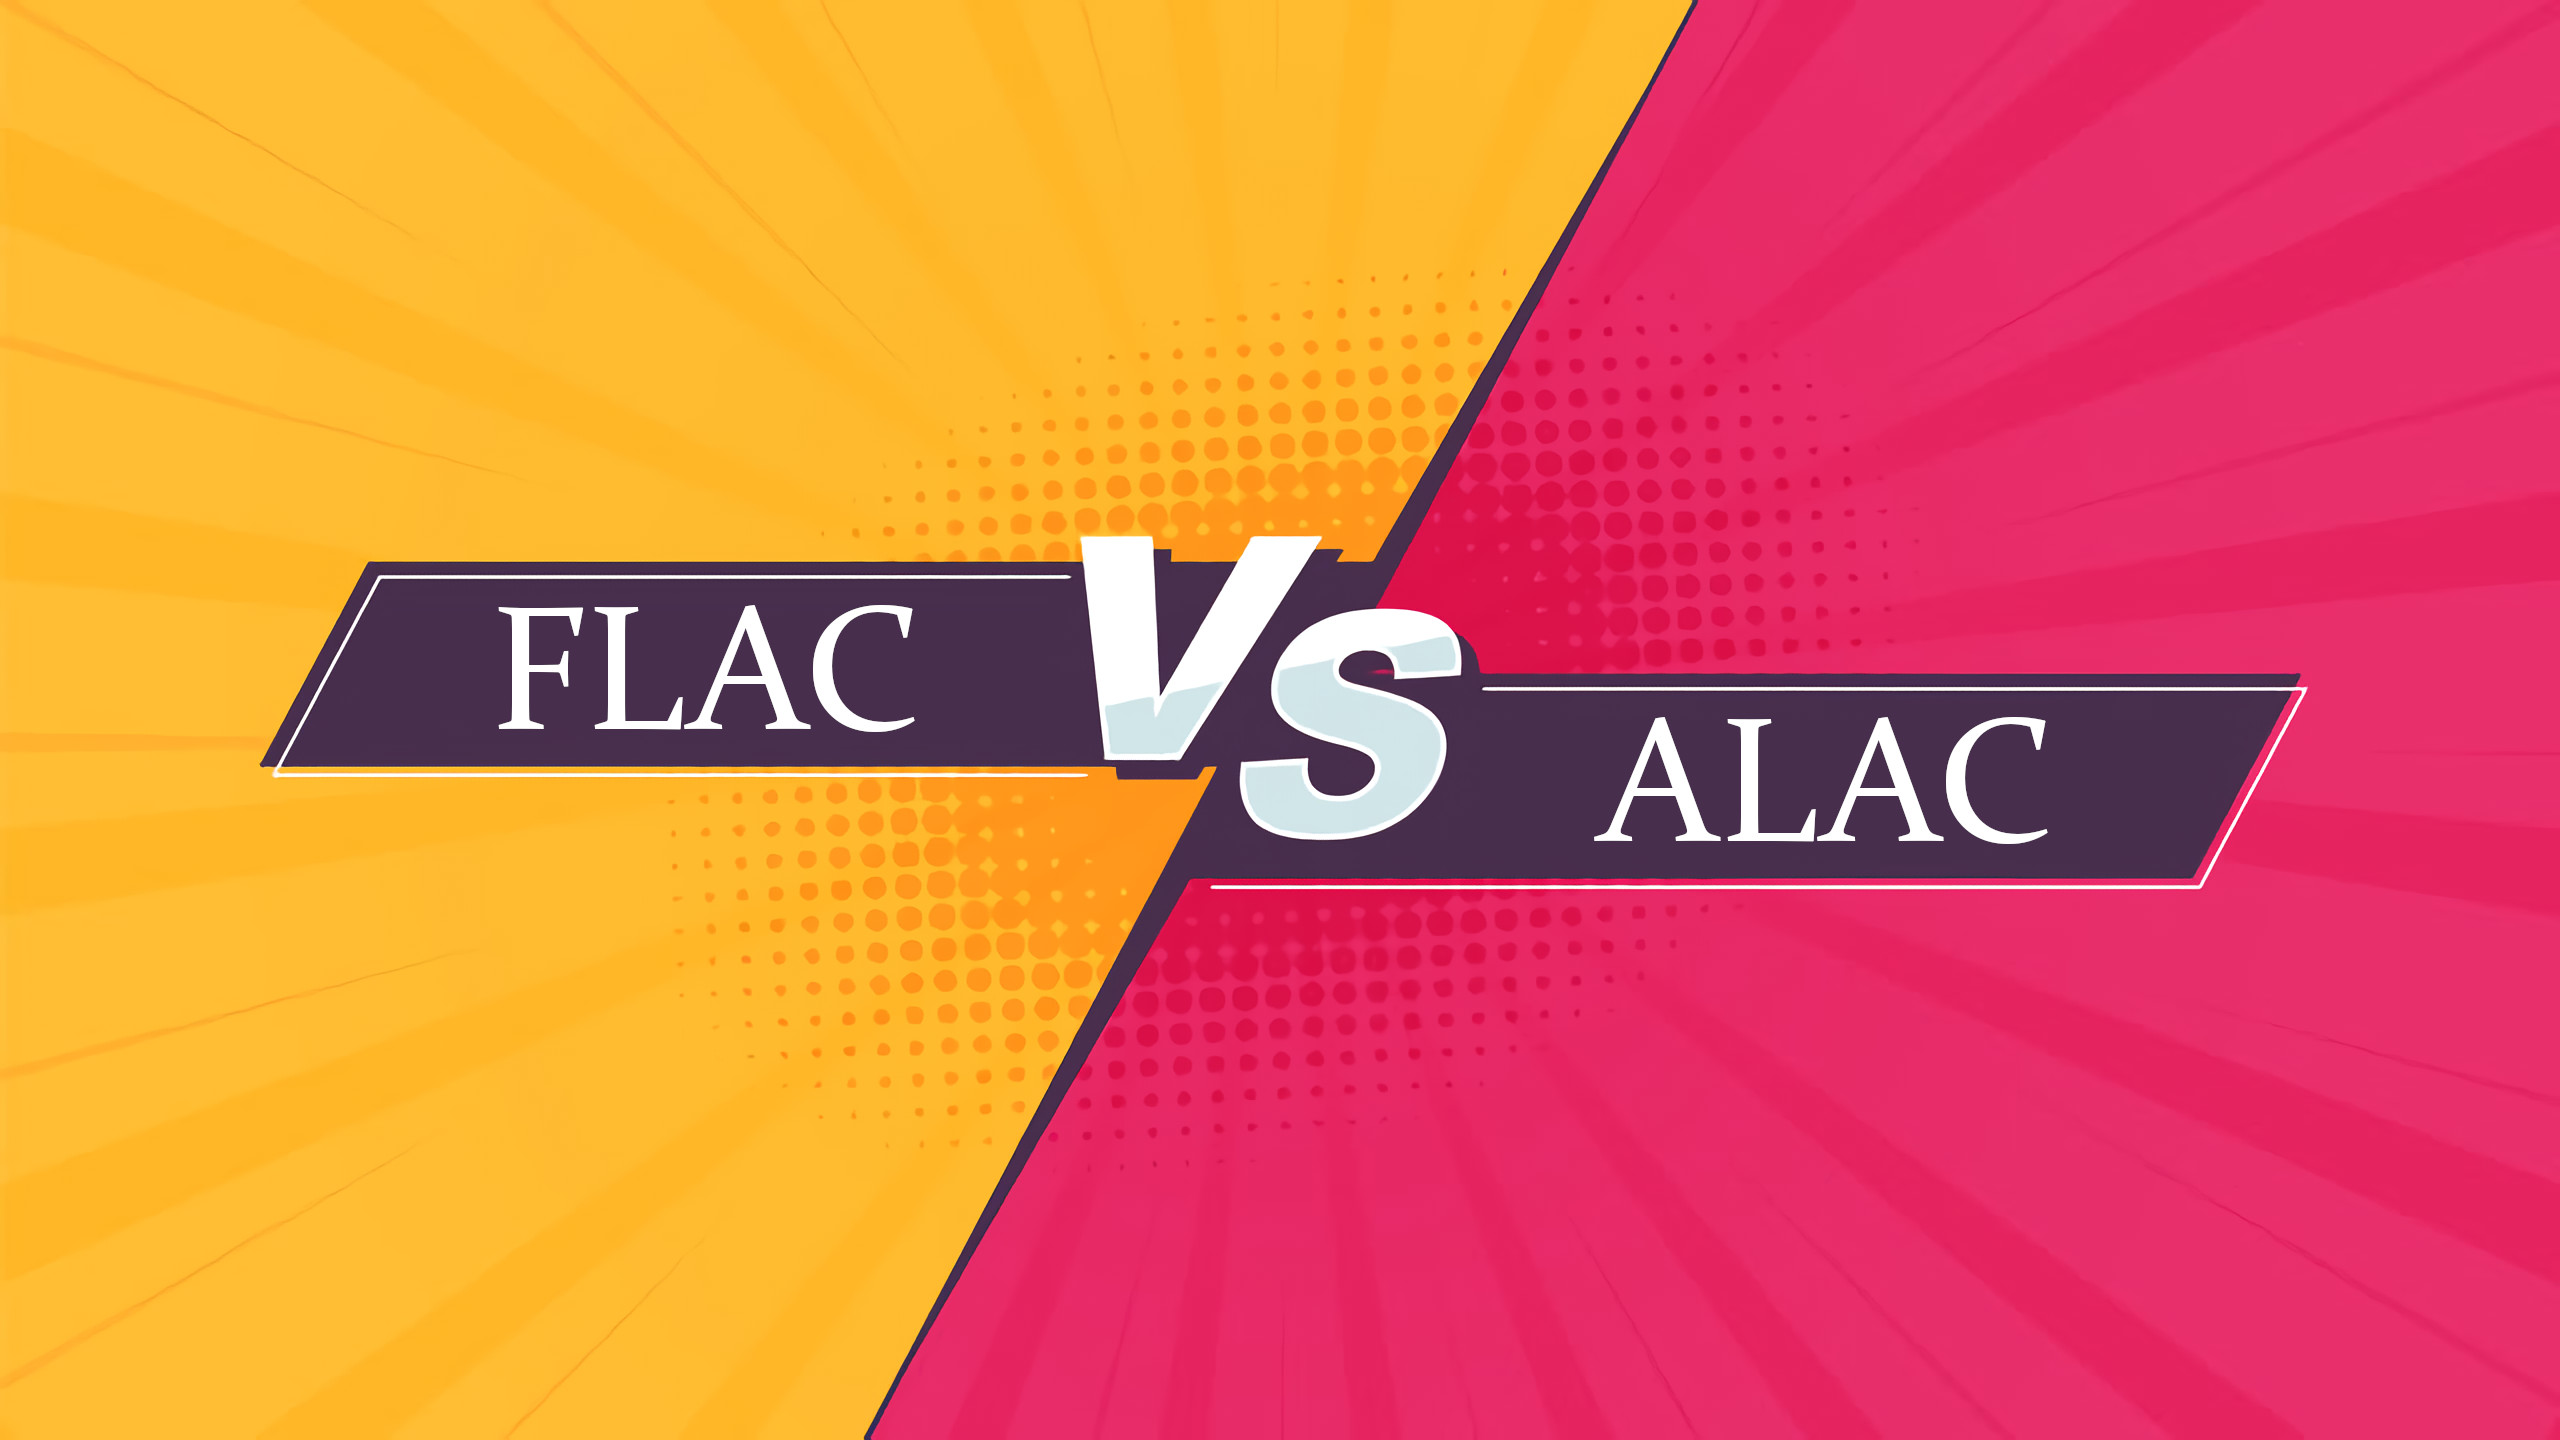 differenza tra flac e alac, flac vs alac, confronto flac e alac